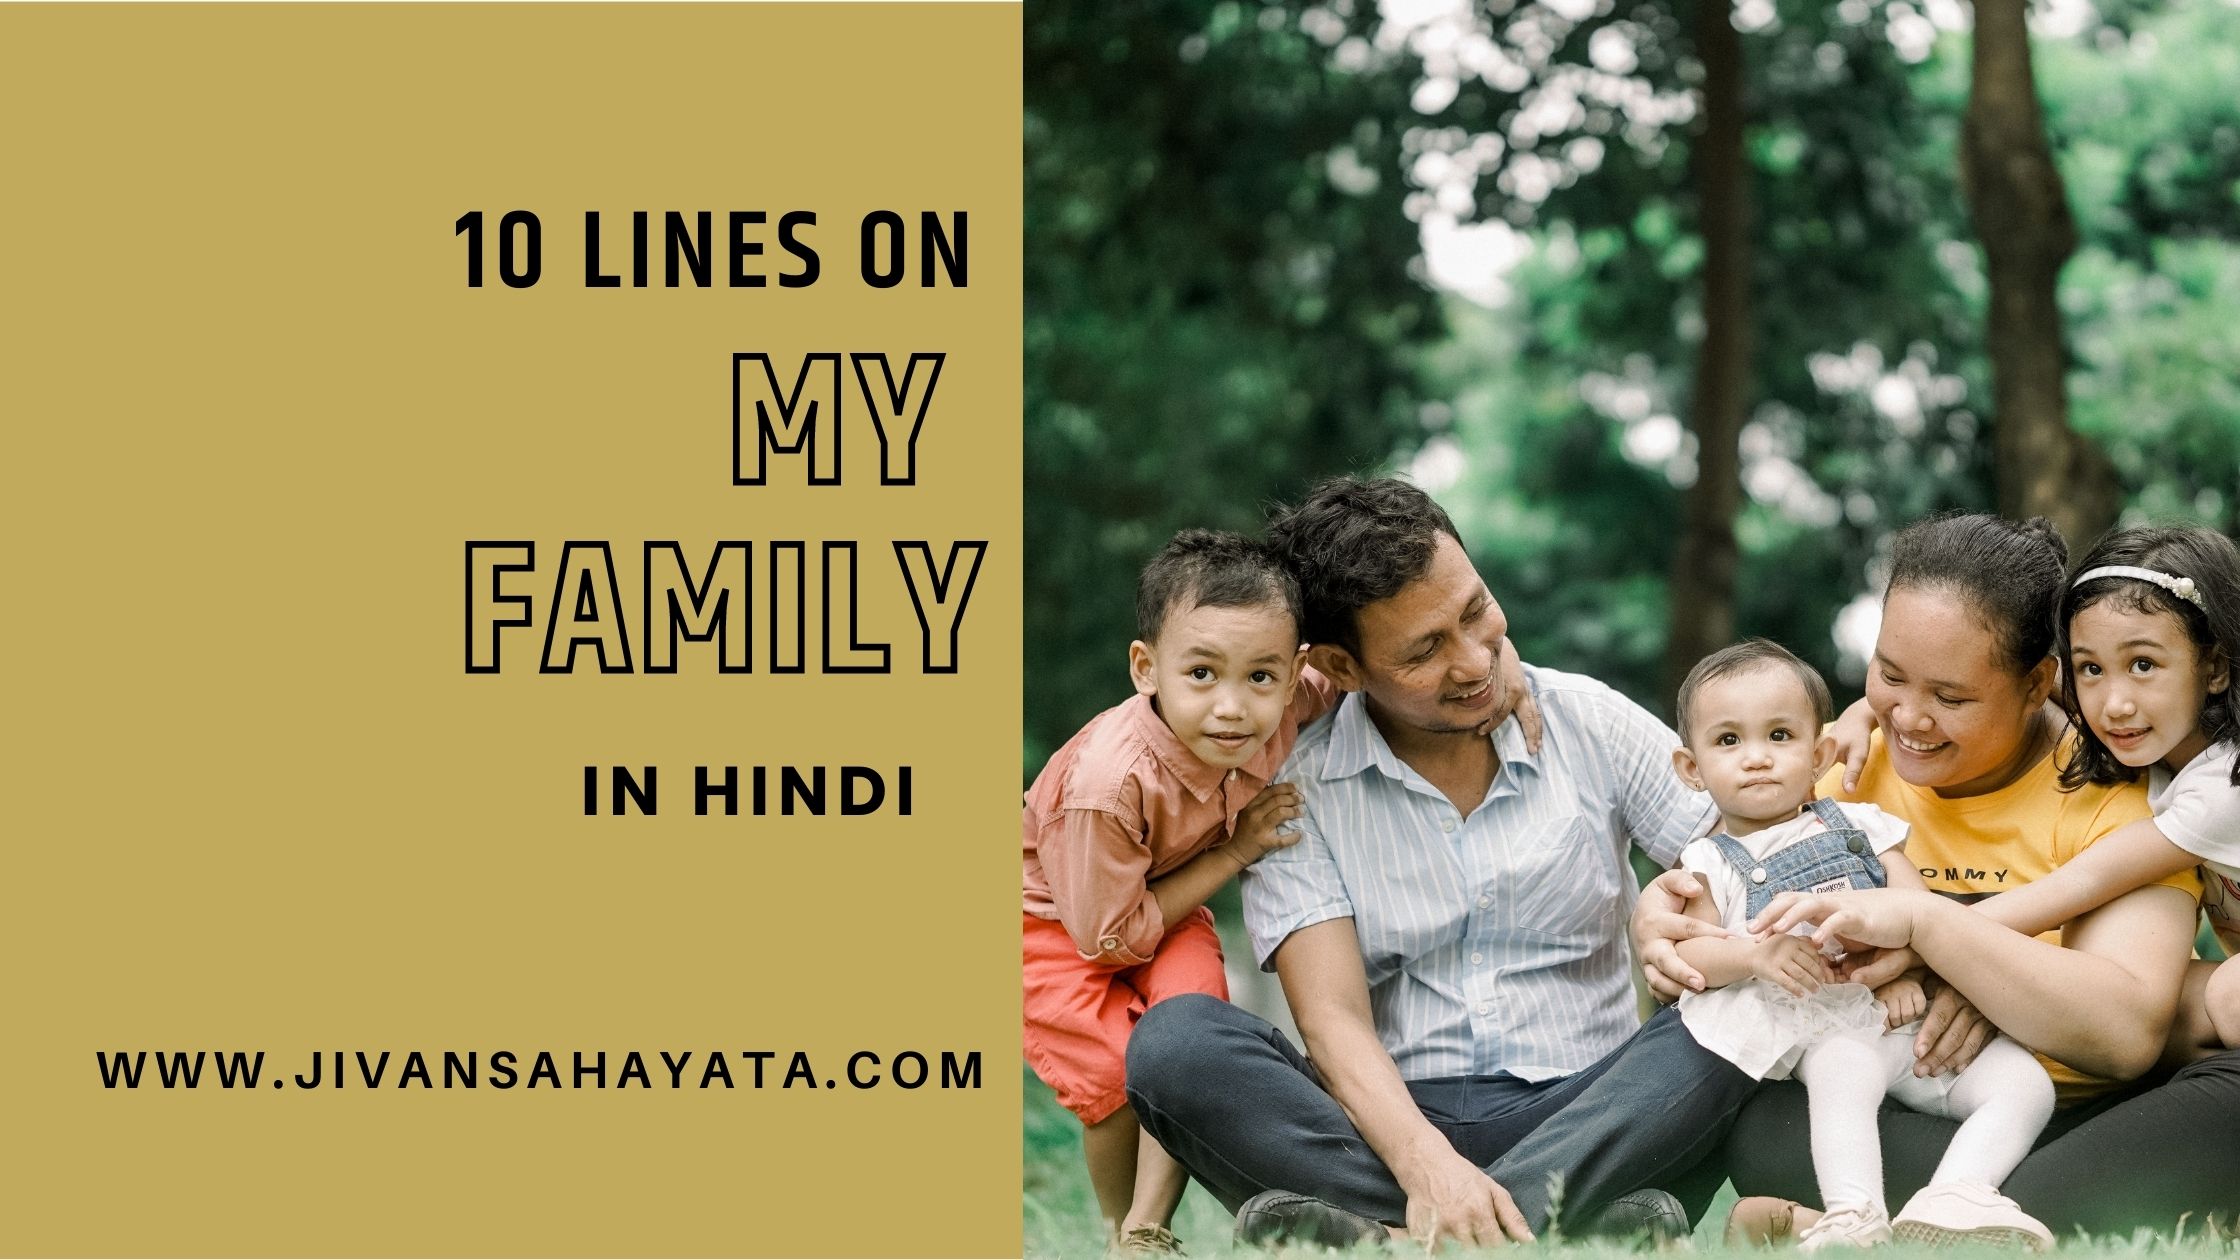 मेरा परिवार पर 10 लाइन - 10 Lines on My Family in Hindi